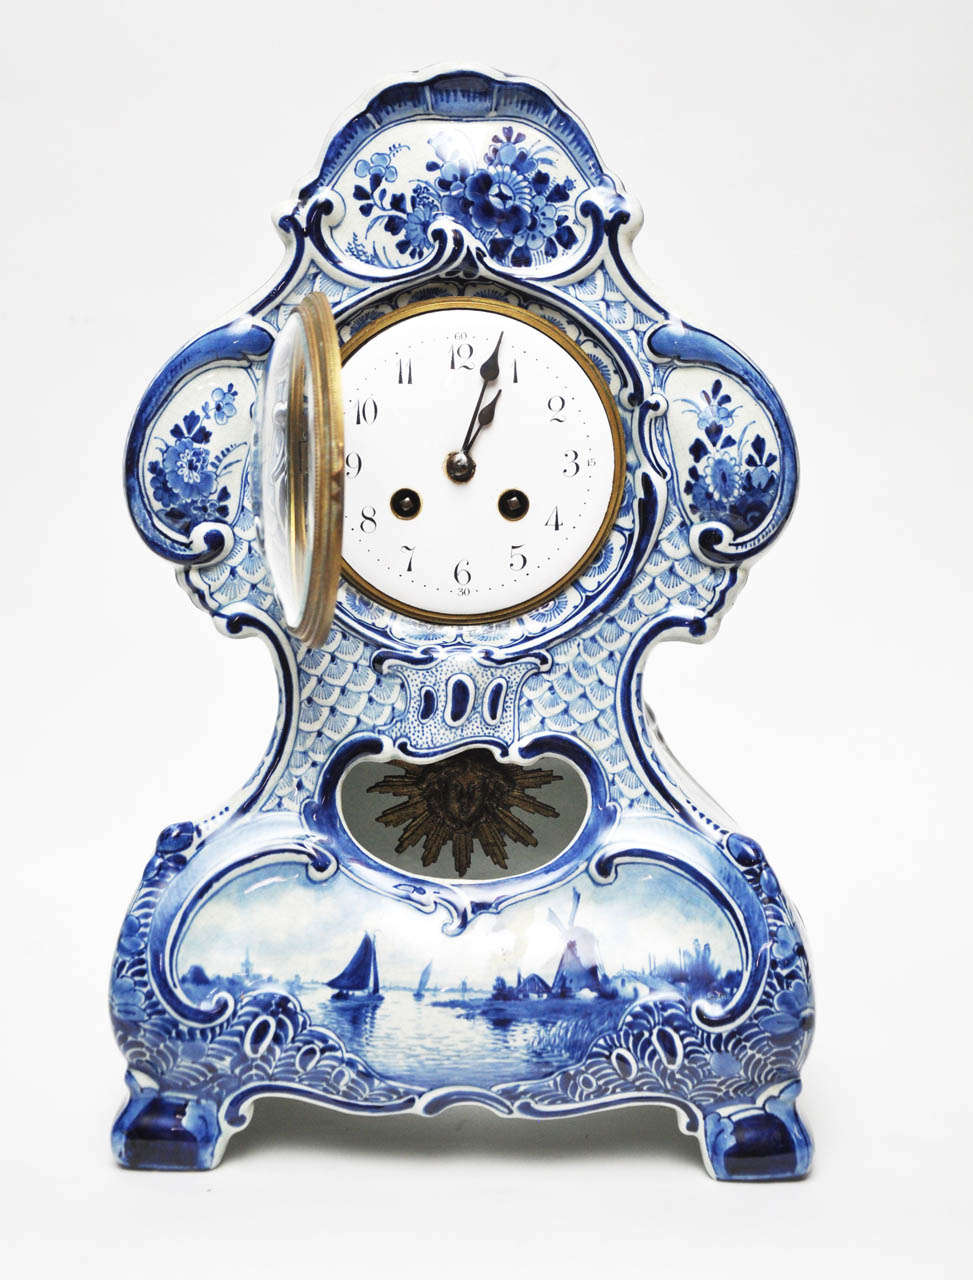 Country Delft Porcelain Mantel Clock For Sale